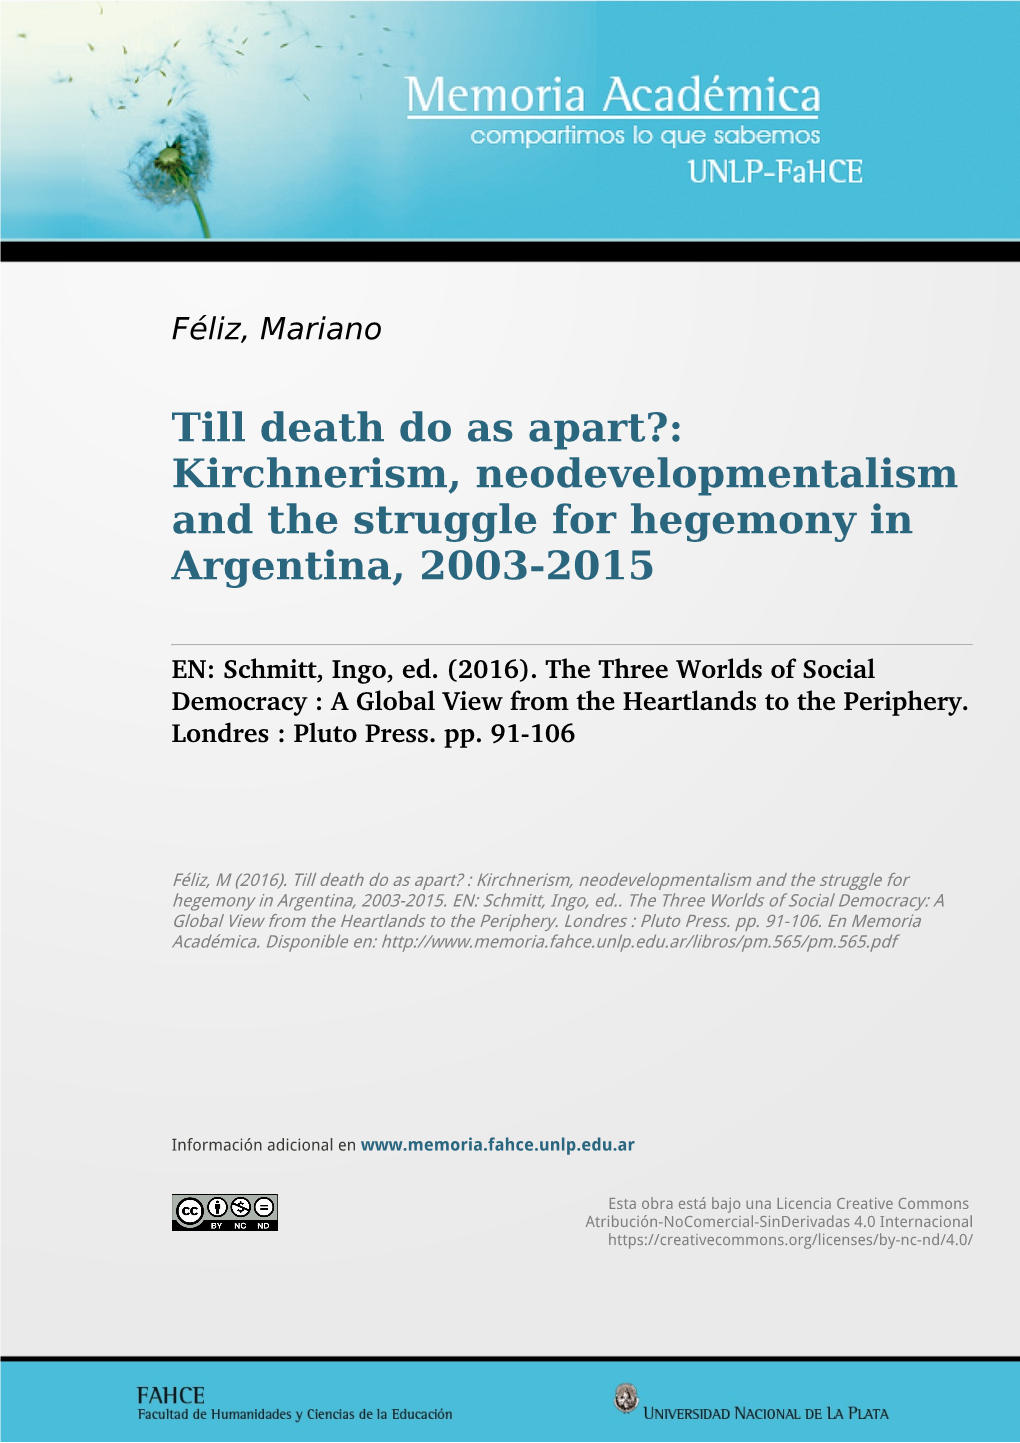 Kirchnerism, Neodevelopmentalism and the Struggle for Hegemony in Argentina, 2003-2015